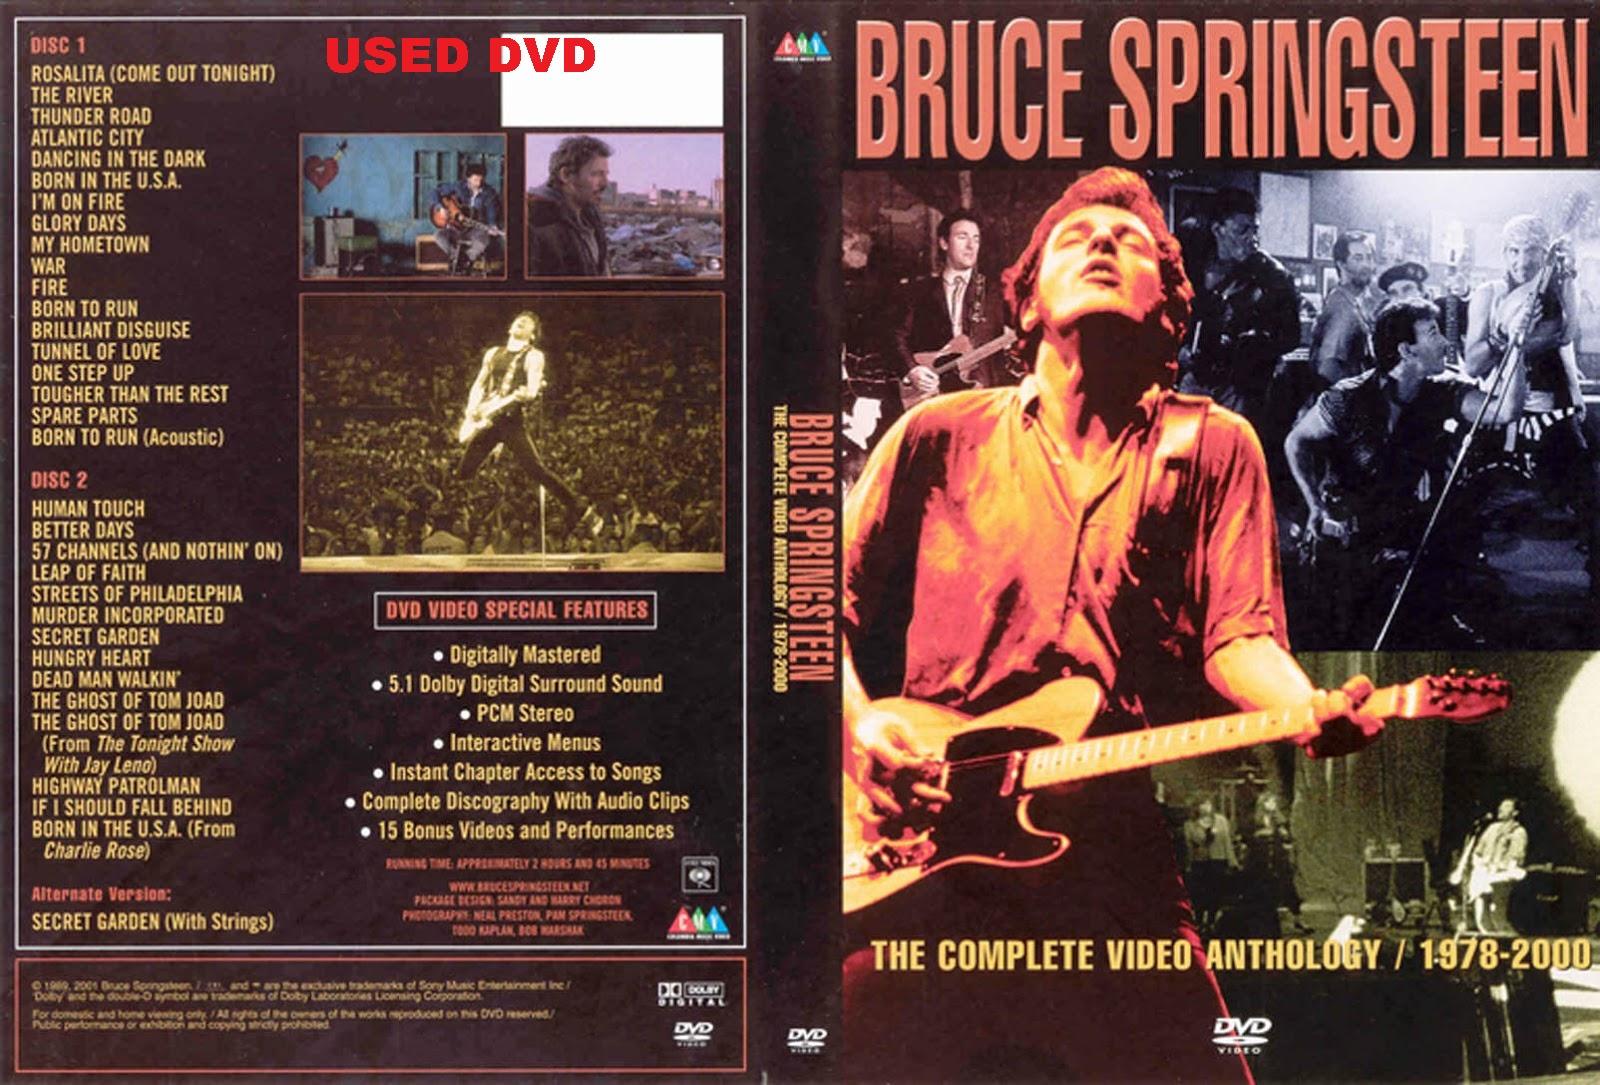 Complete Video Anthology 1978-2000 [DVD]